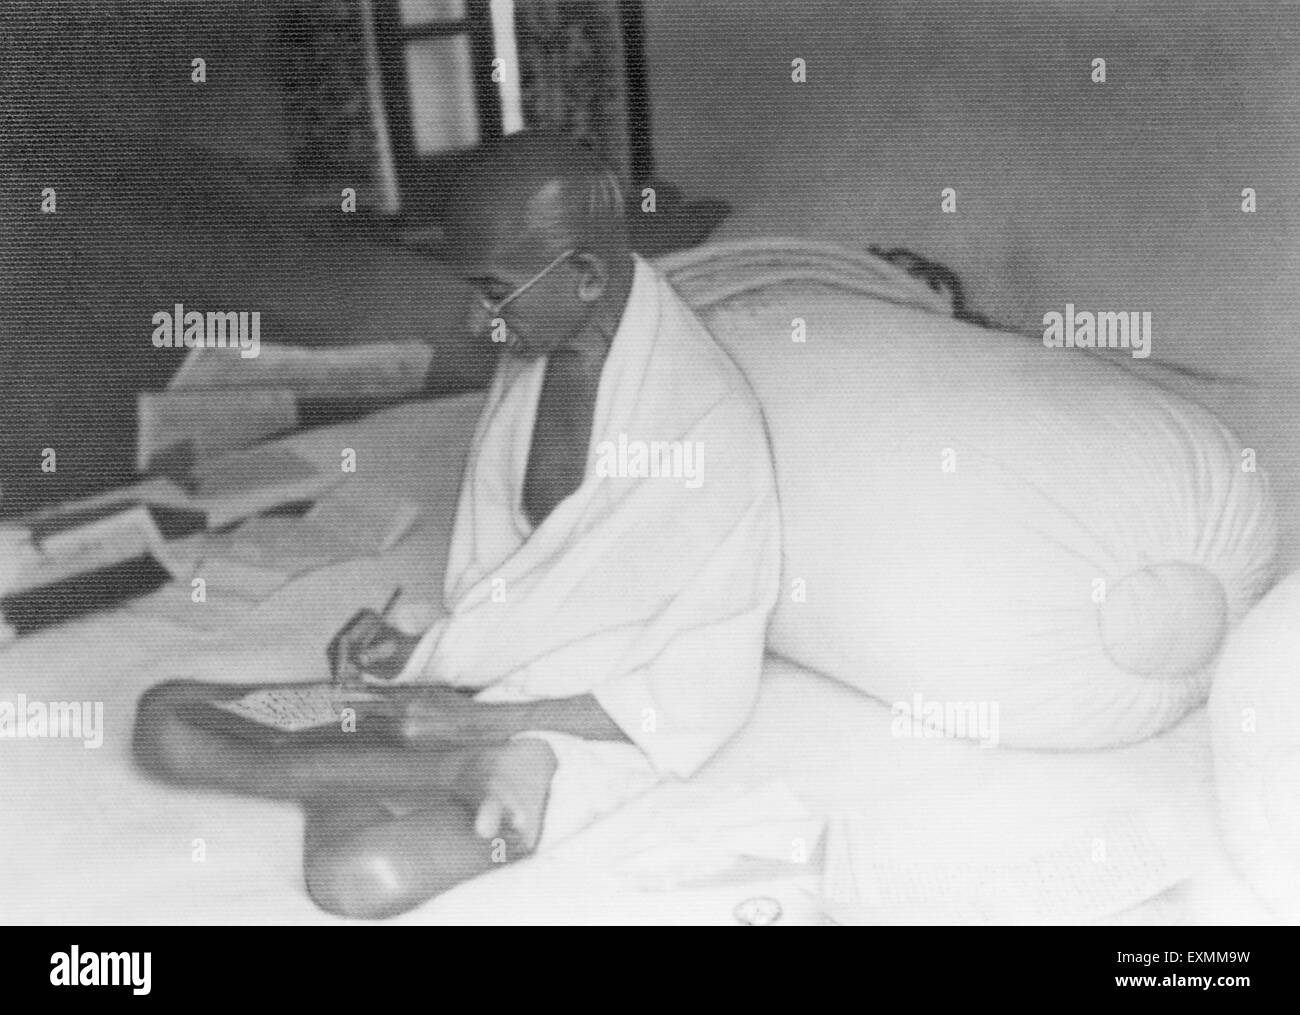 Mahatma Gandhi schreiben, Indien, Asien, alter Jahrgang 1900s Bild Stockfoto